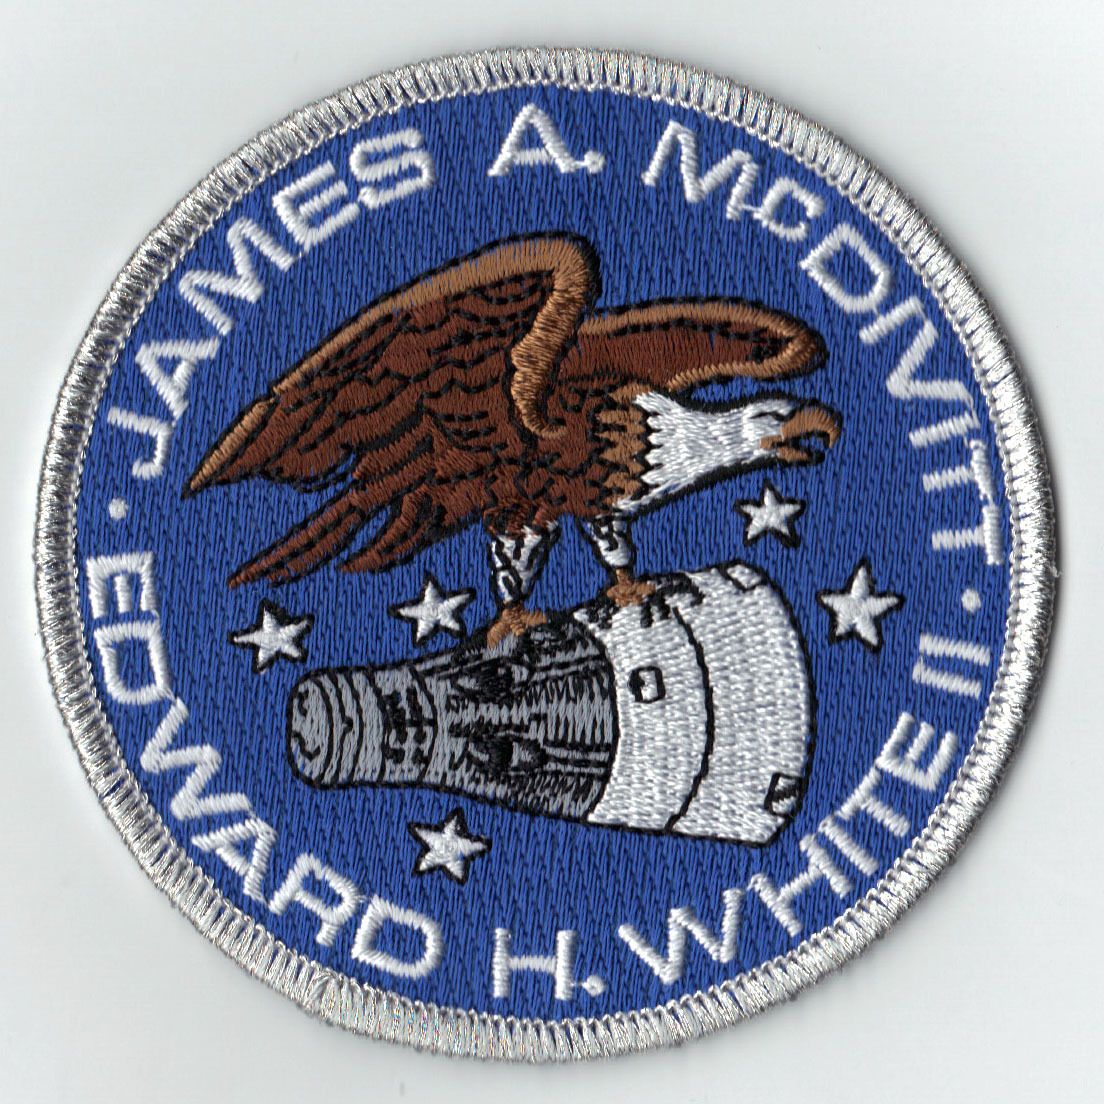 New Original Gemini 4 James McDivitt Edward White Space Mission Patch